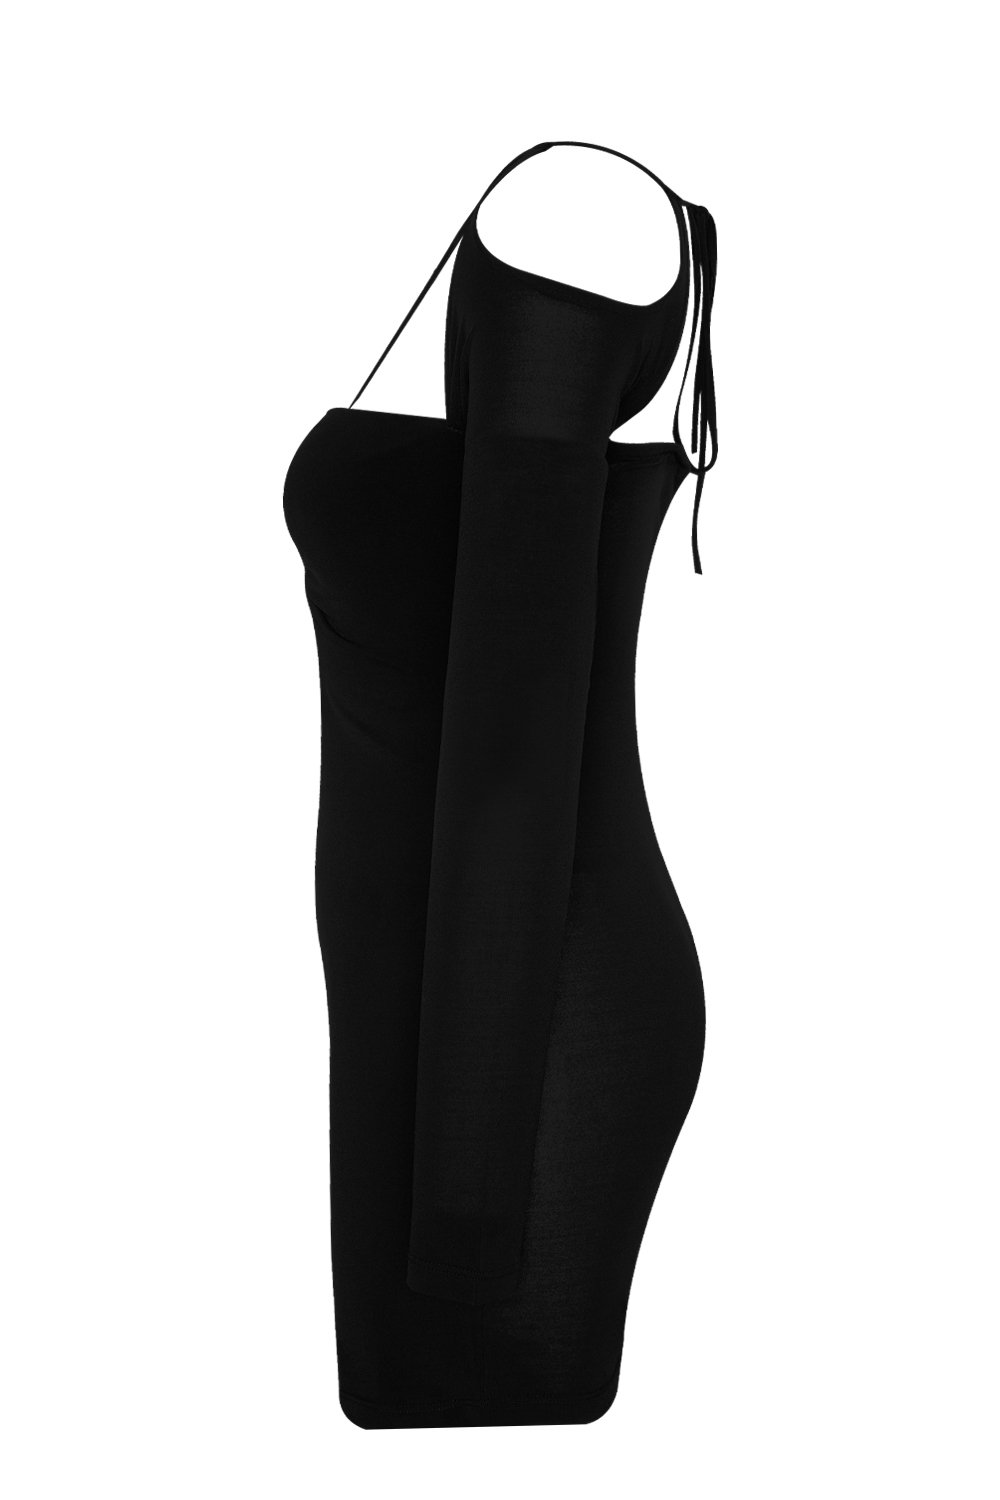 Missi Siyah Elbise EY200 - 11